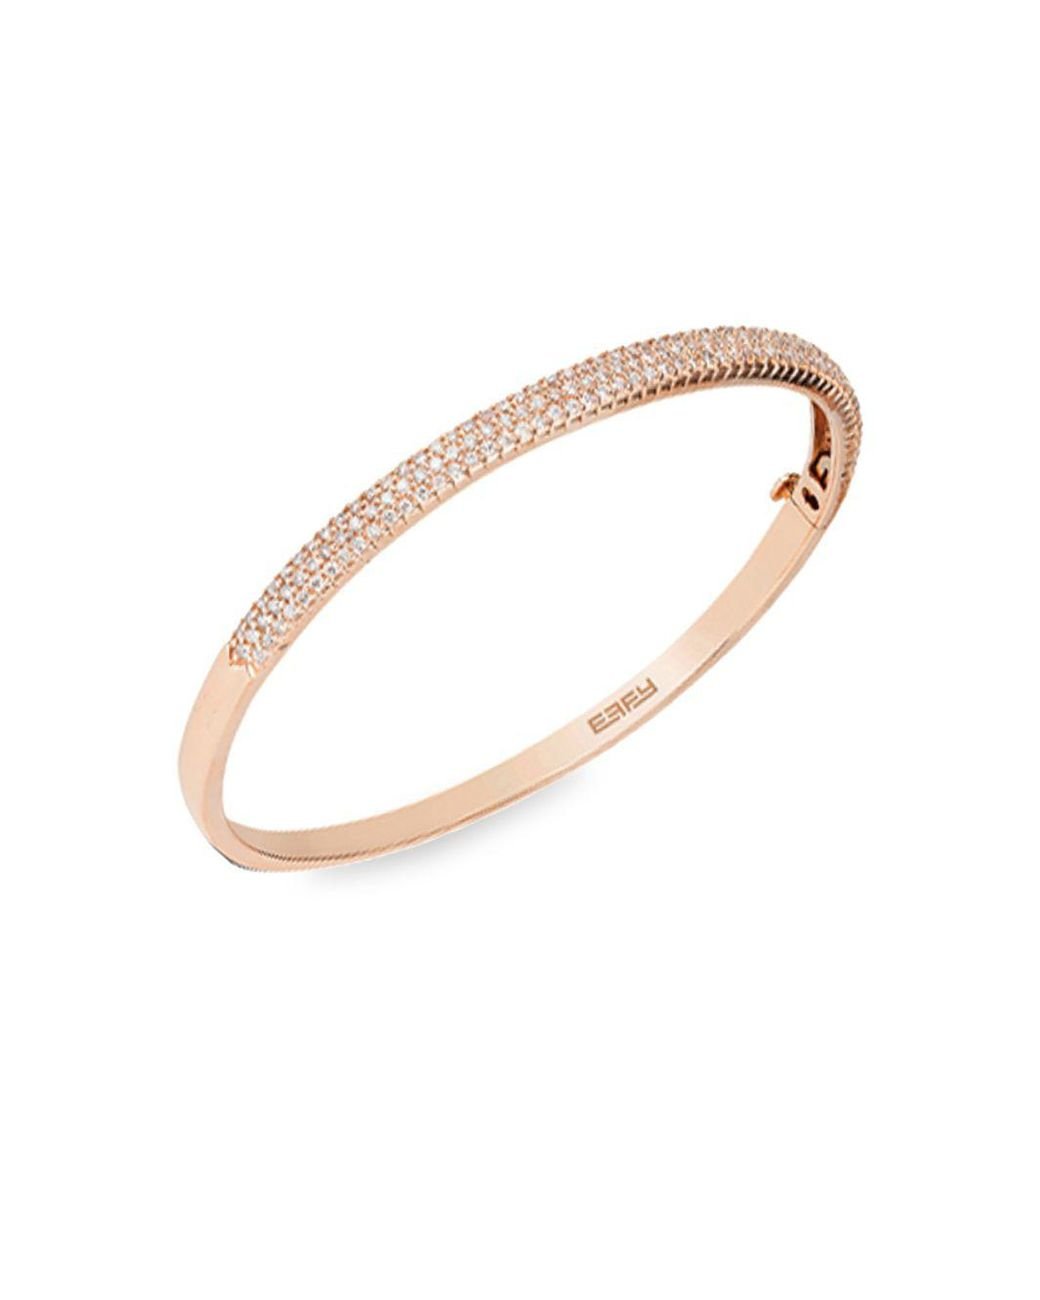 Lyst - Effy 14k Rose Gold & Diamond Bangle Bracelet in Metallic - Save 50%